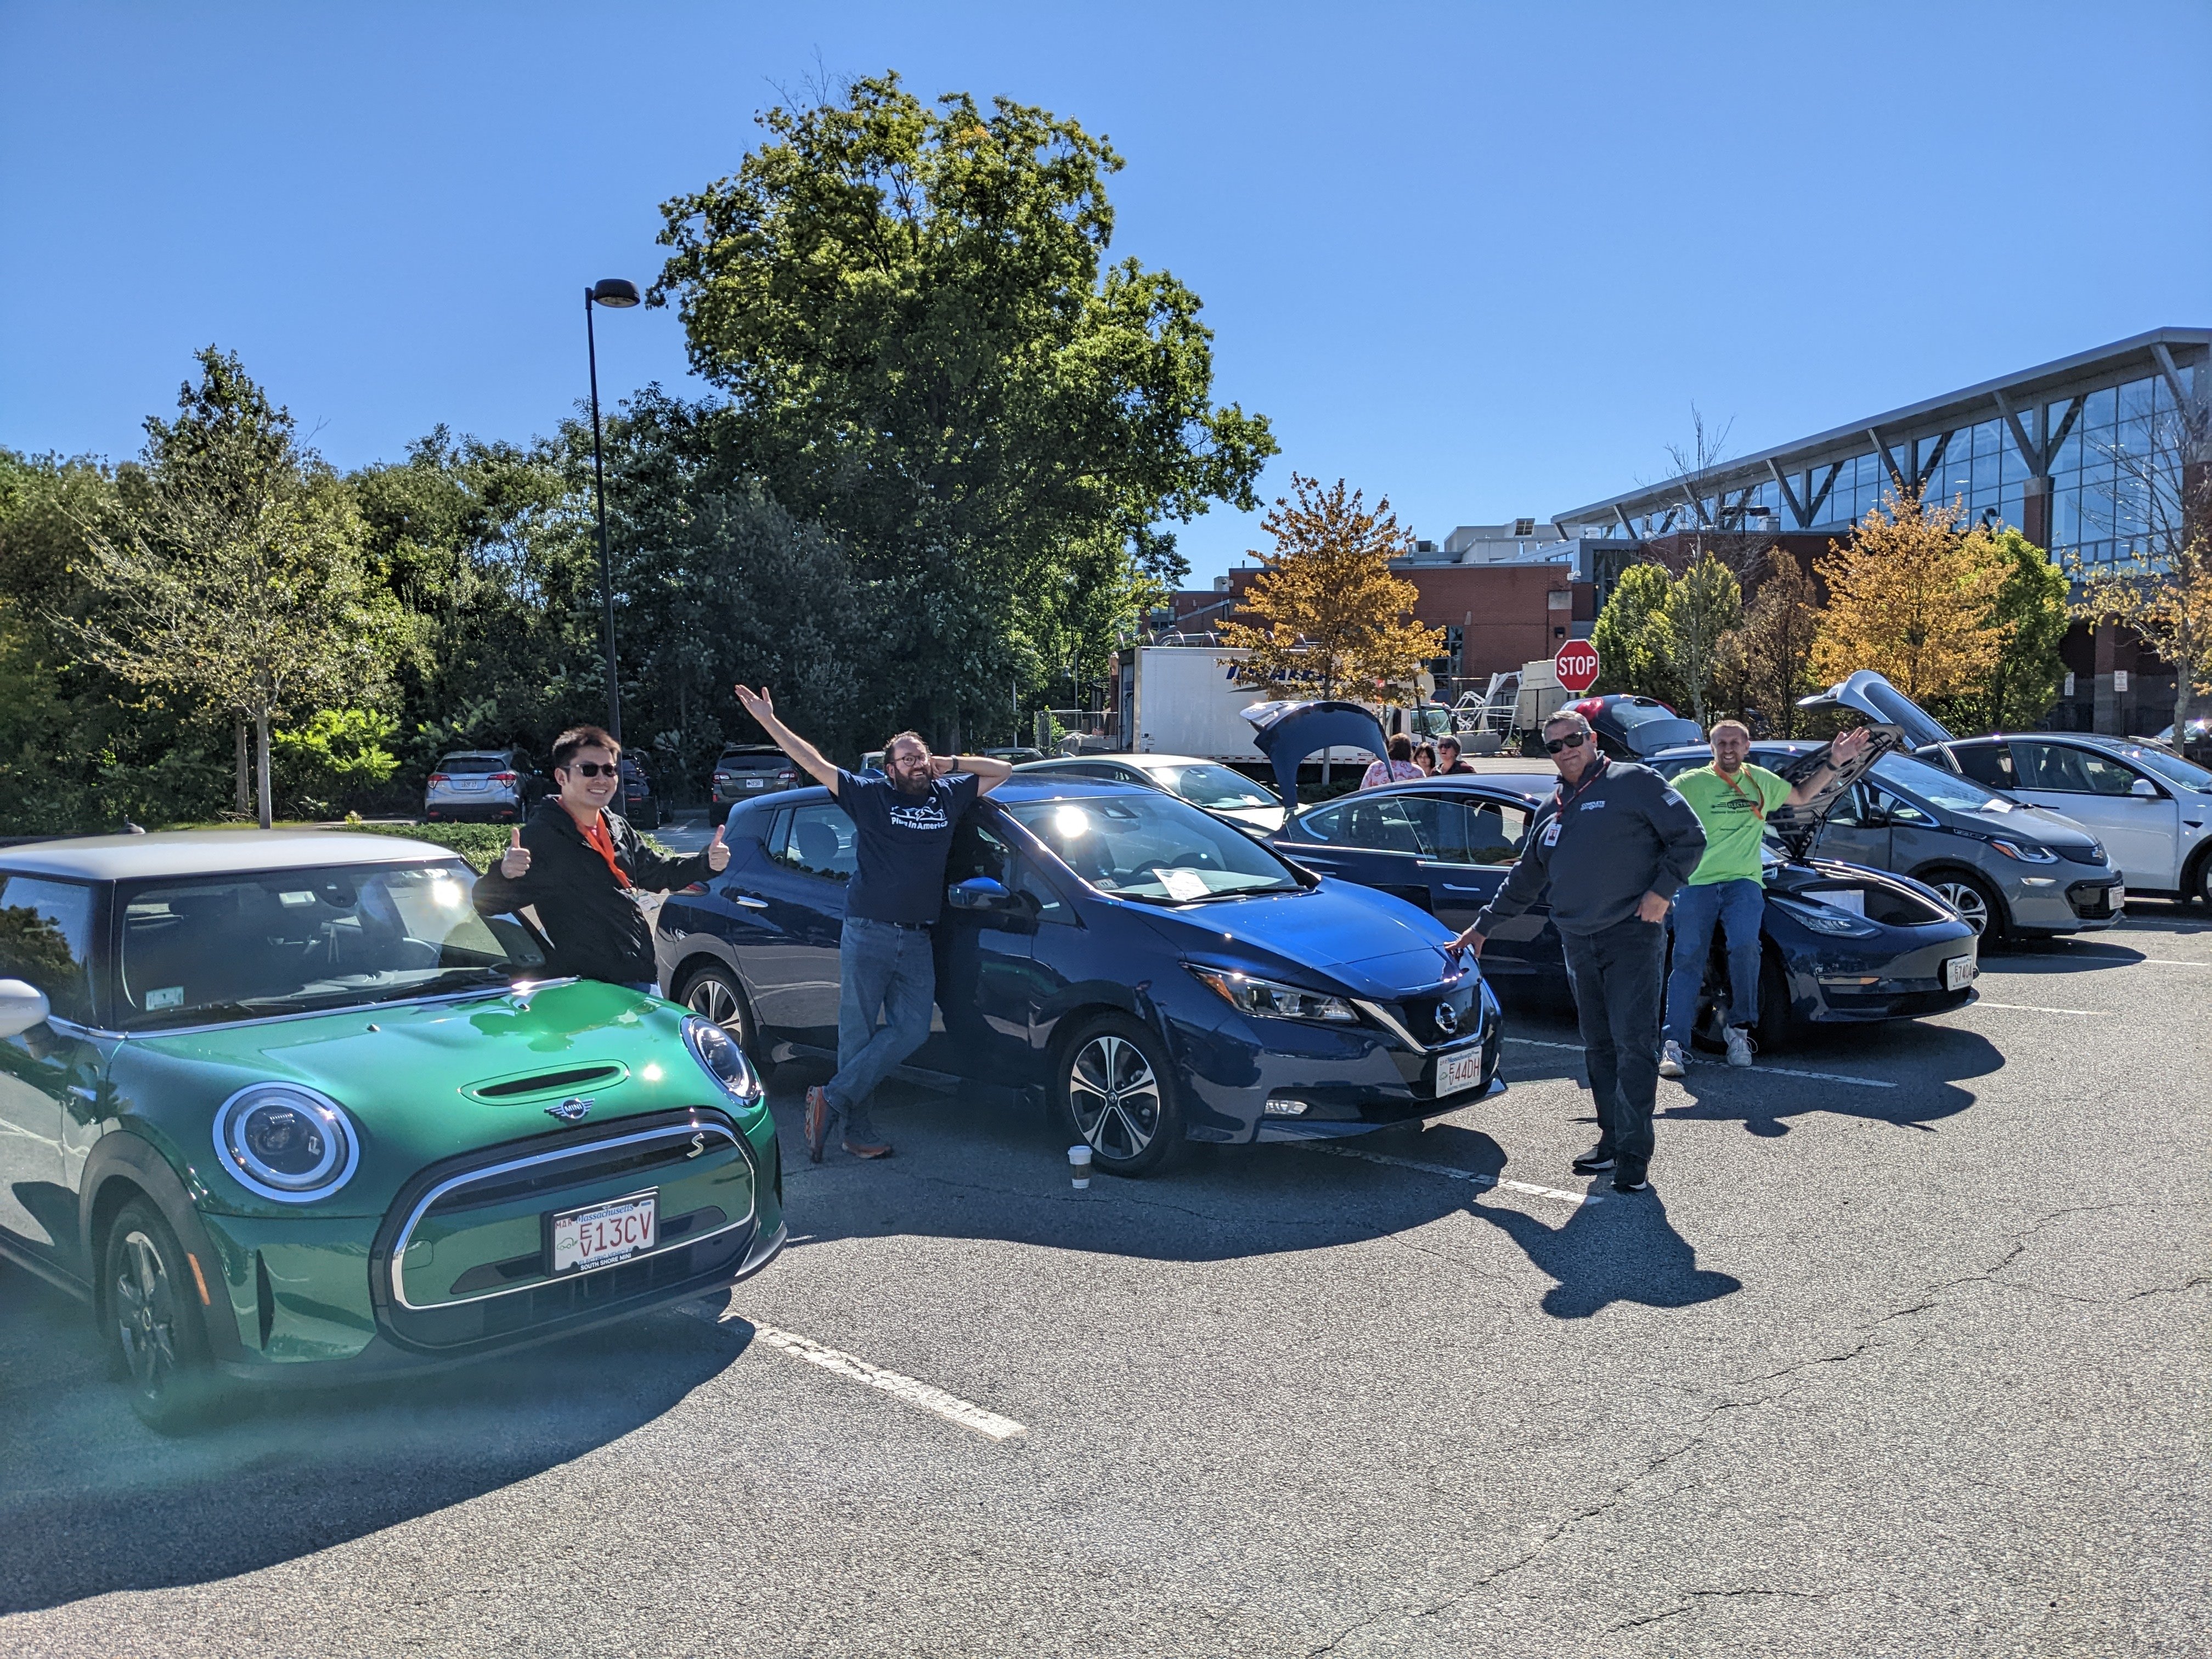 NDEW 2022 QARI Quincy EV Showcase 9.24.22 Green MINI Cooper blue Nissan LEAF black Tesla row of cars people pointing great horizontal picture